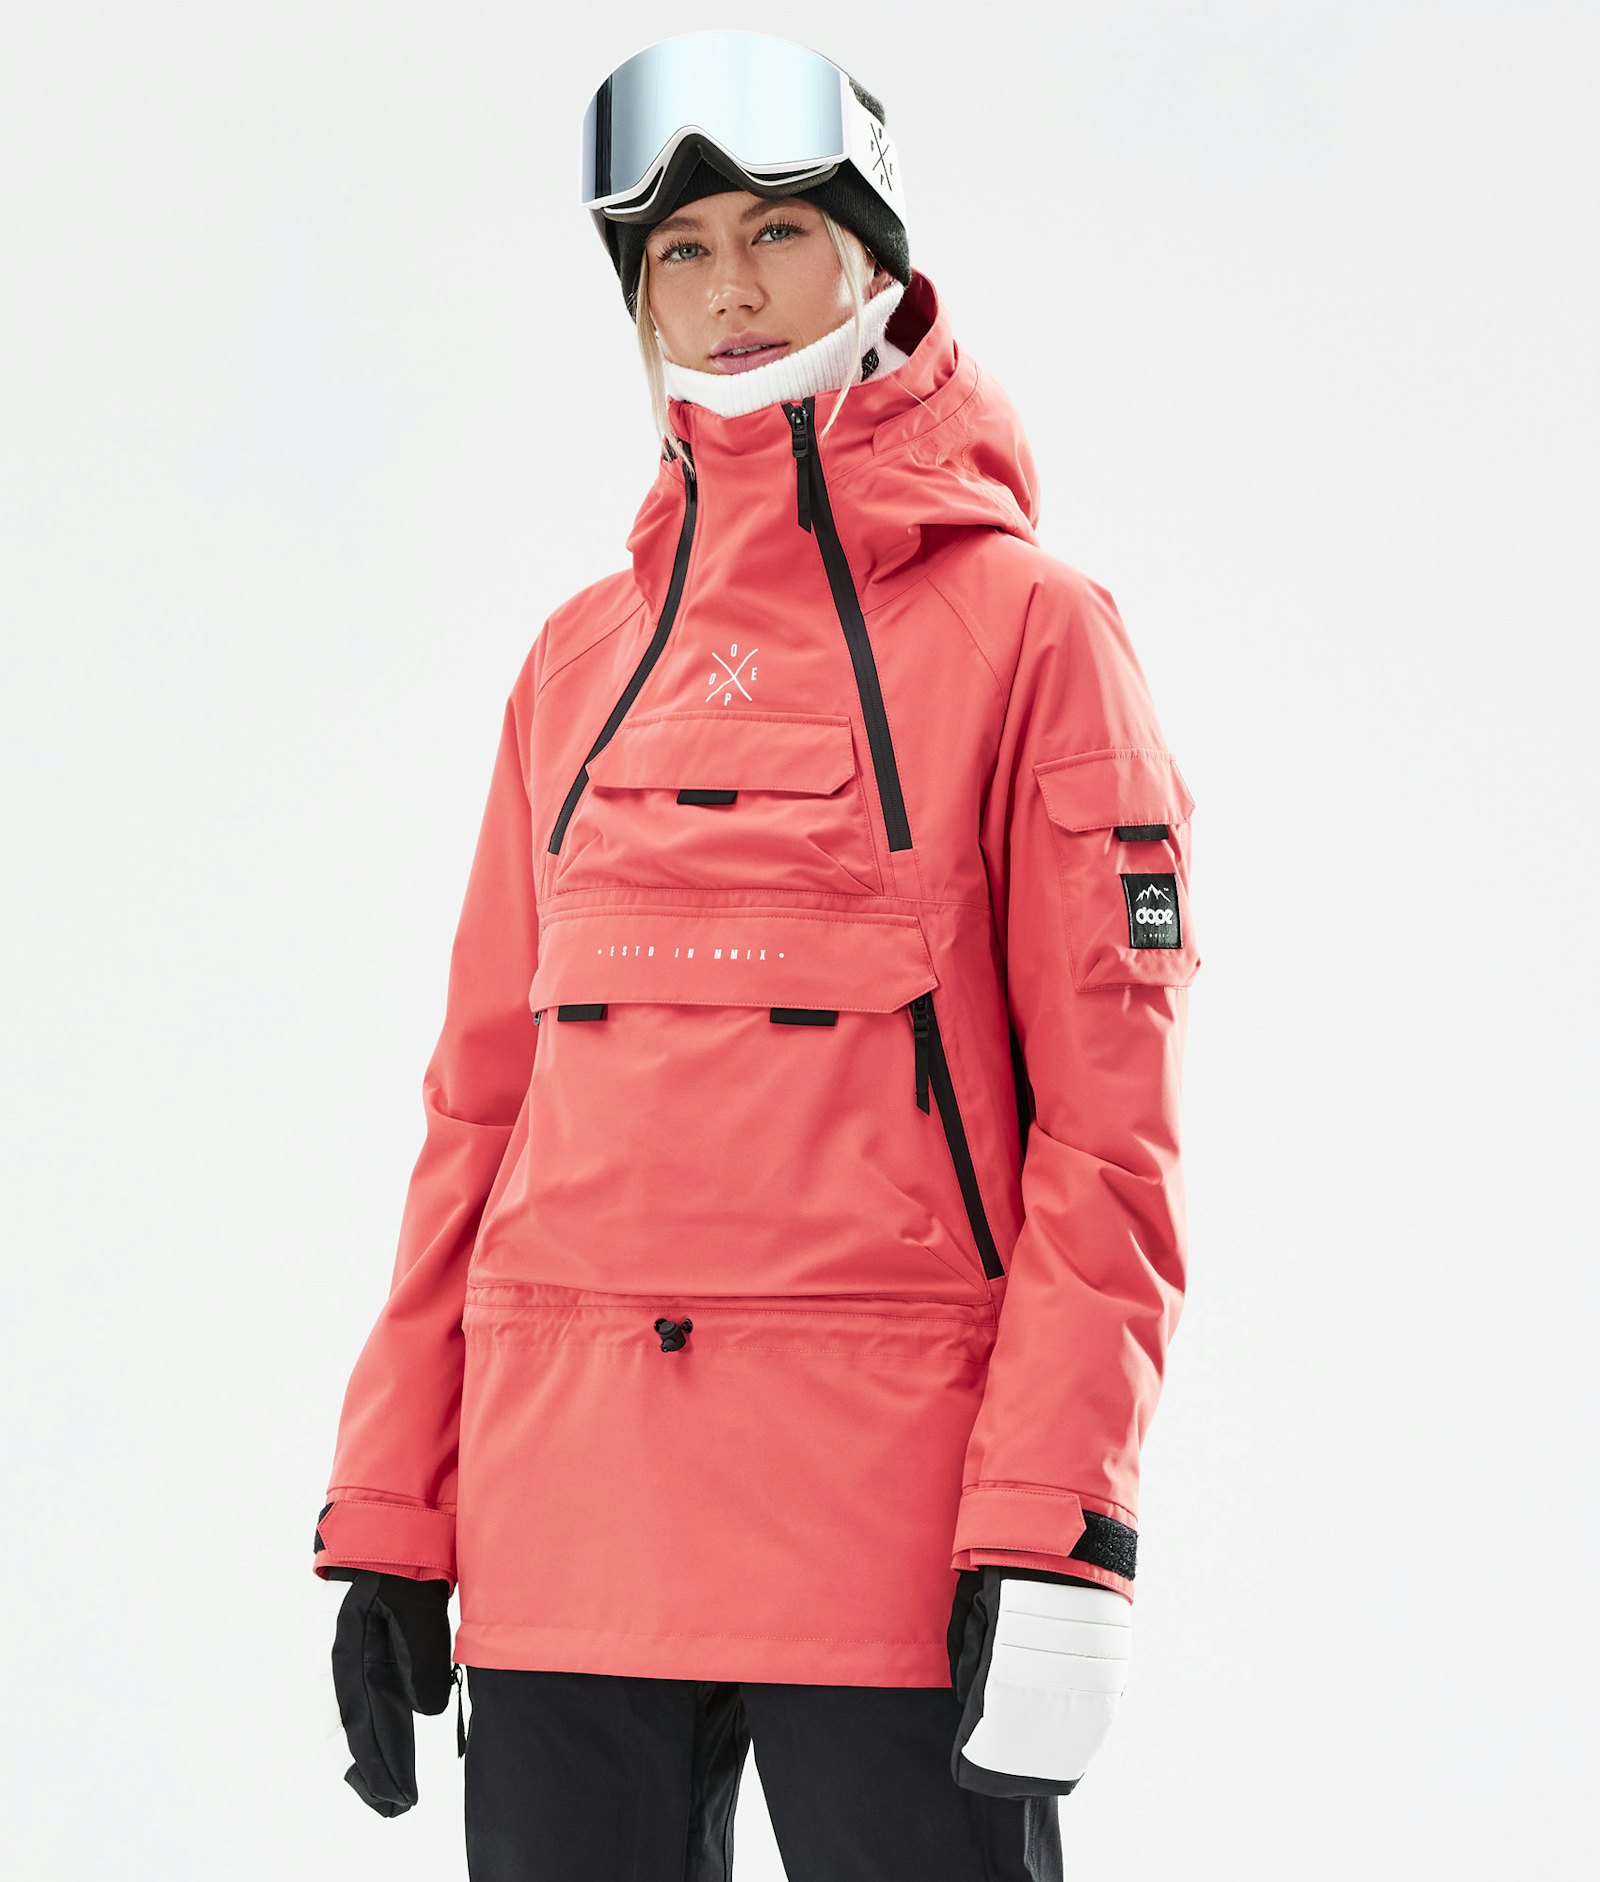 Akin W 2021 Veste de Ski Femme Coral